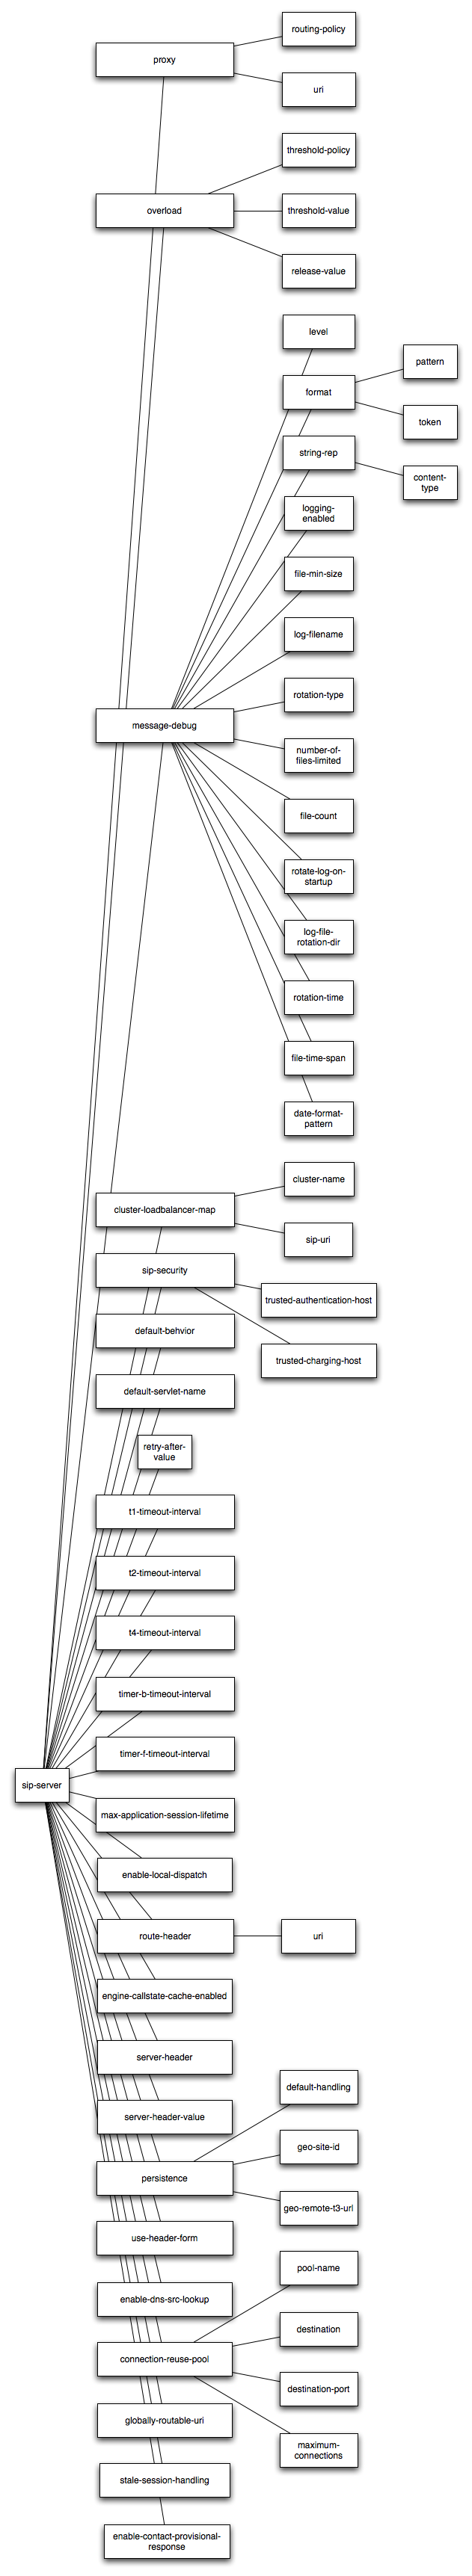 Element Hierarchy of sipserver.xml